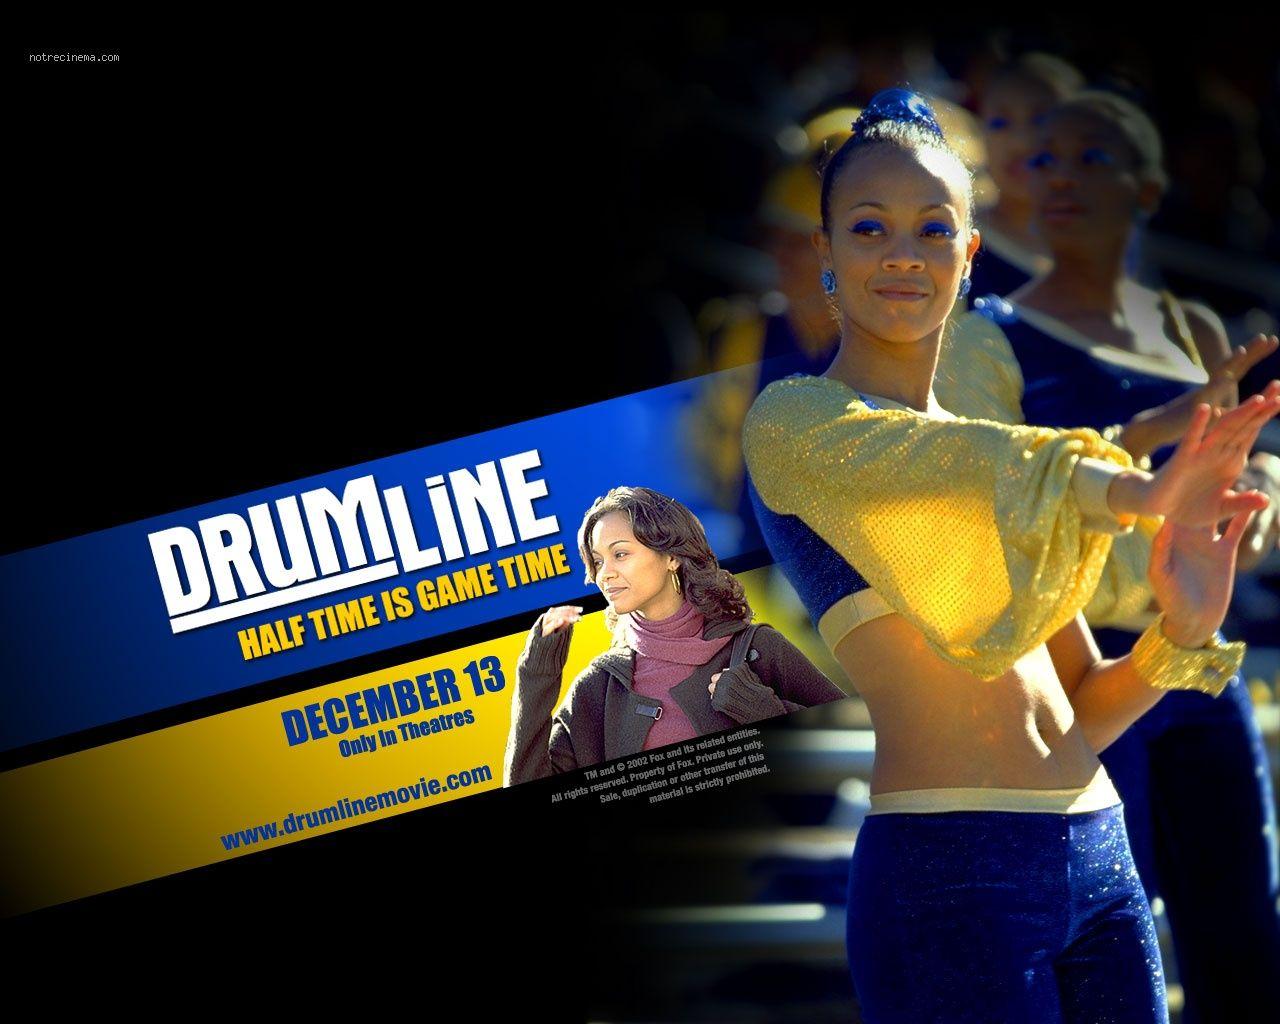 drumline free to use